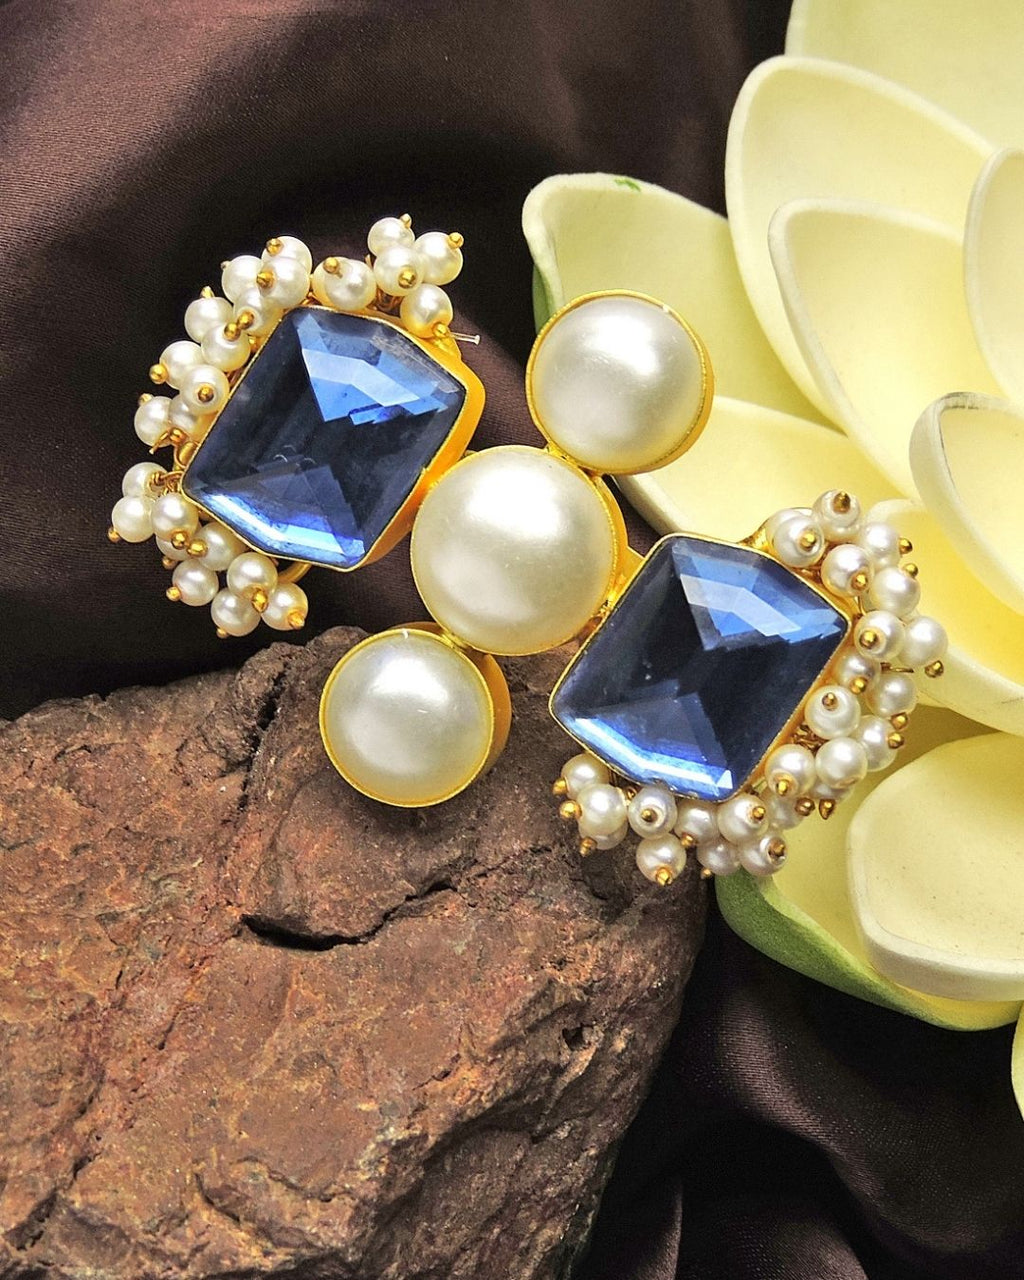 Darla Ring - Rings - Handcrafted Jewellery - Made in India - Dubai Jewellery, Fashion & Lifestyle - Dori